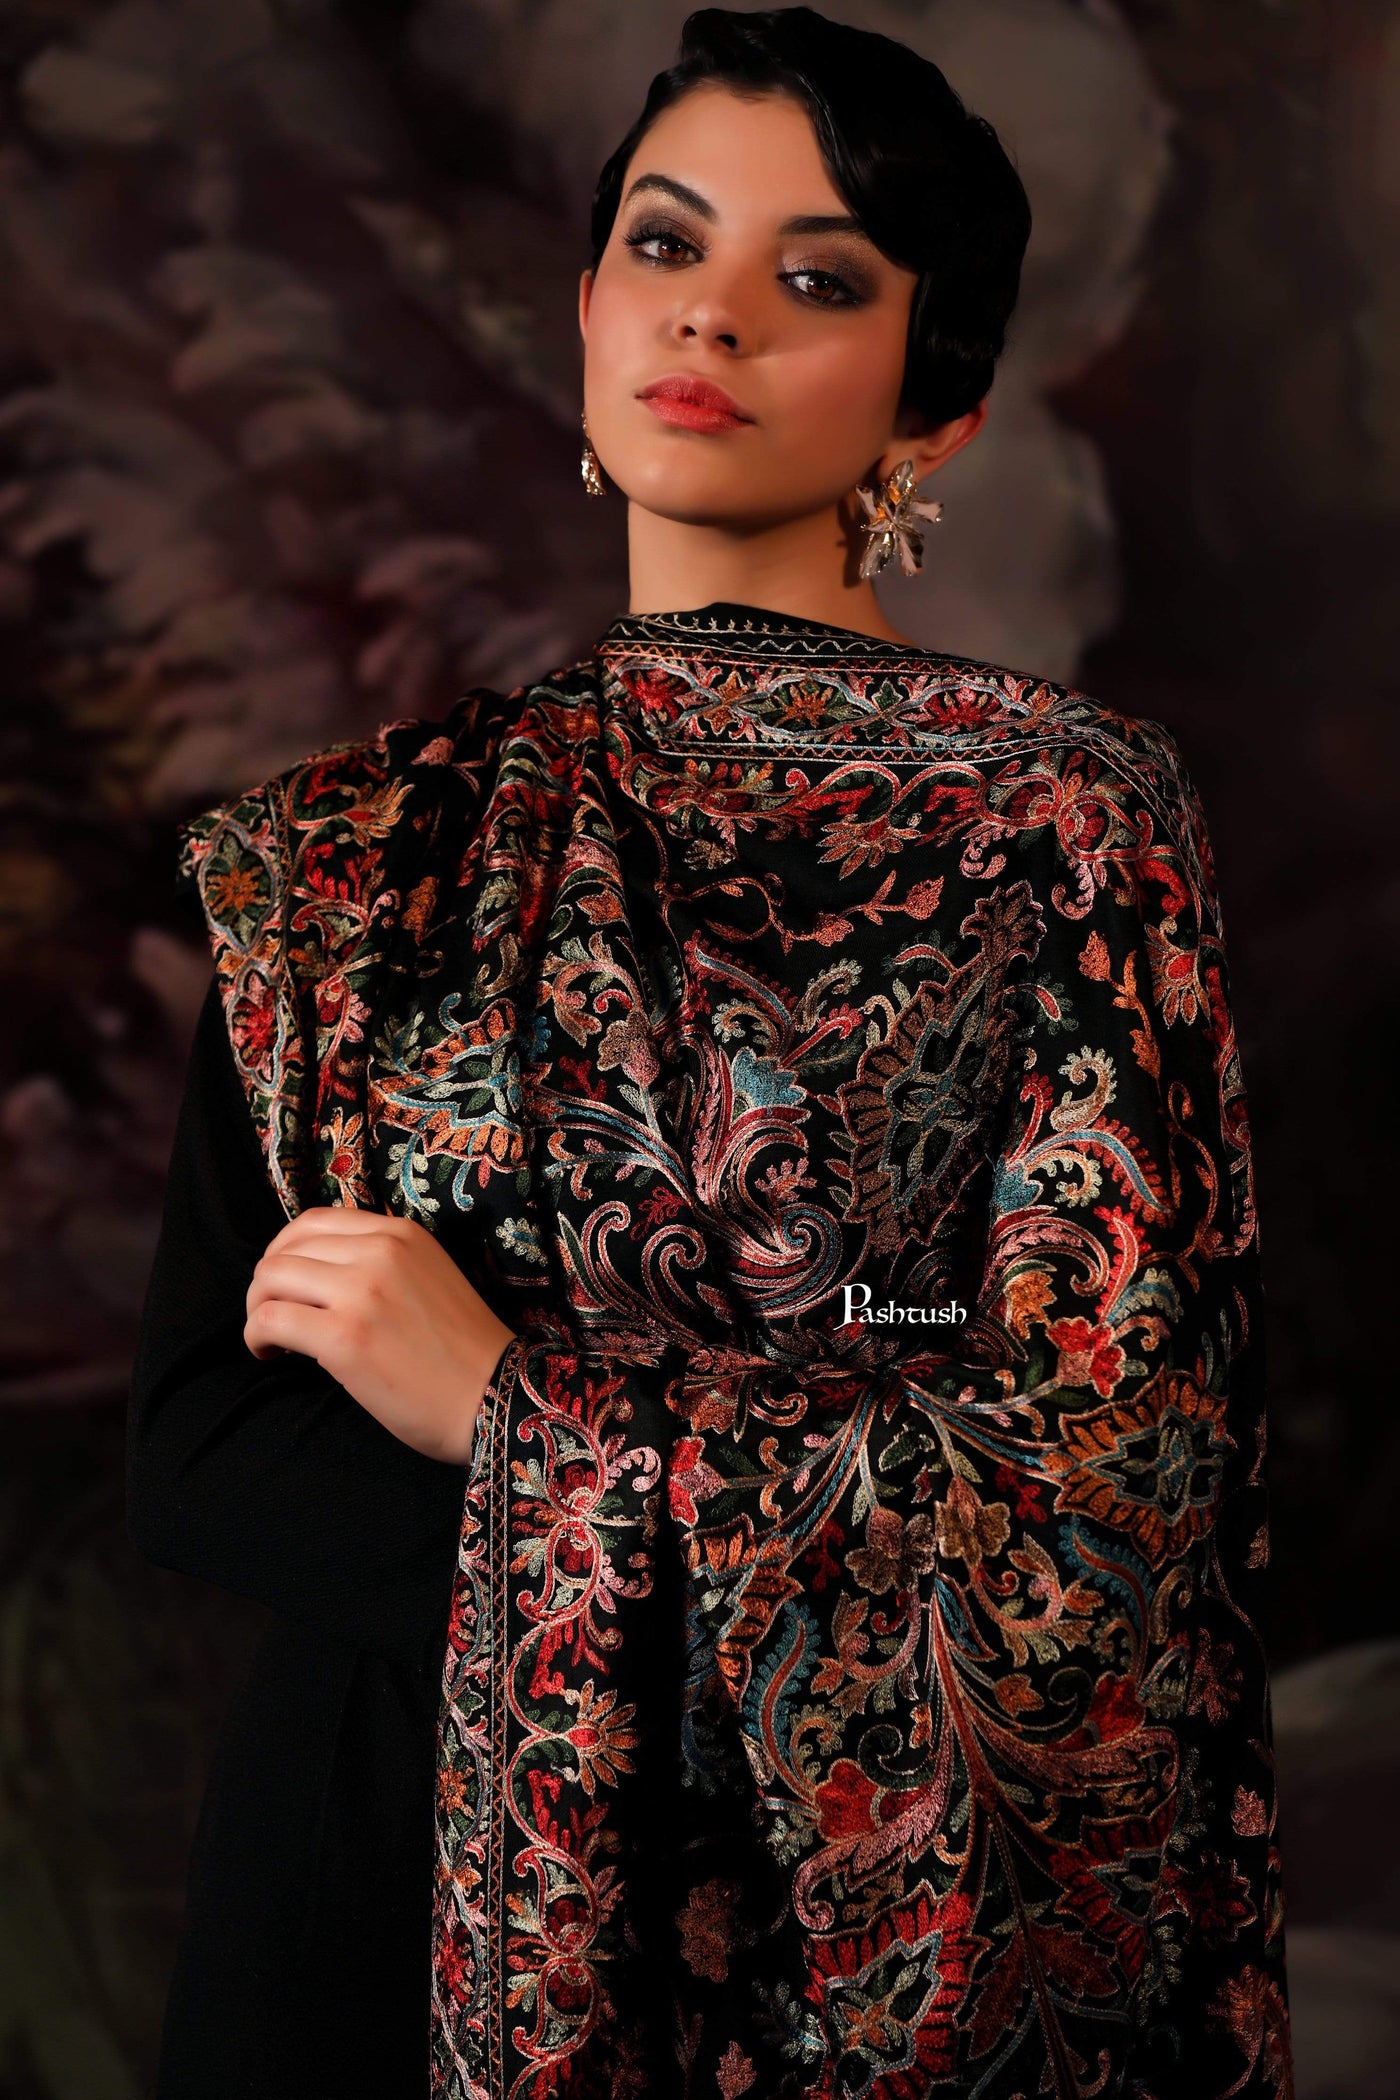 Pashtush India 70x200 Pashtush Tres Chic Regal Collection, Wool Embroidery Nalki Shawl Scarf, Rich Black